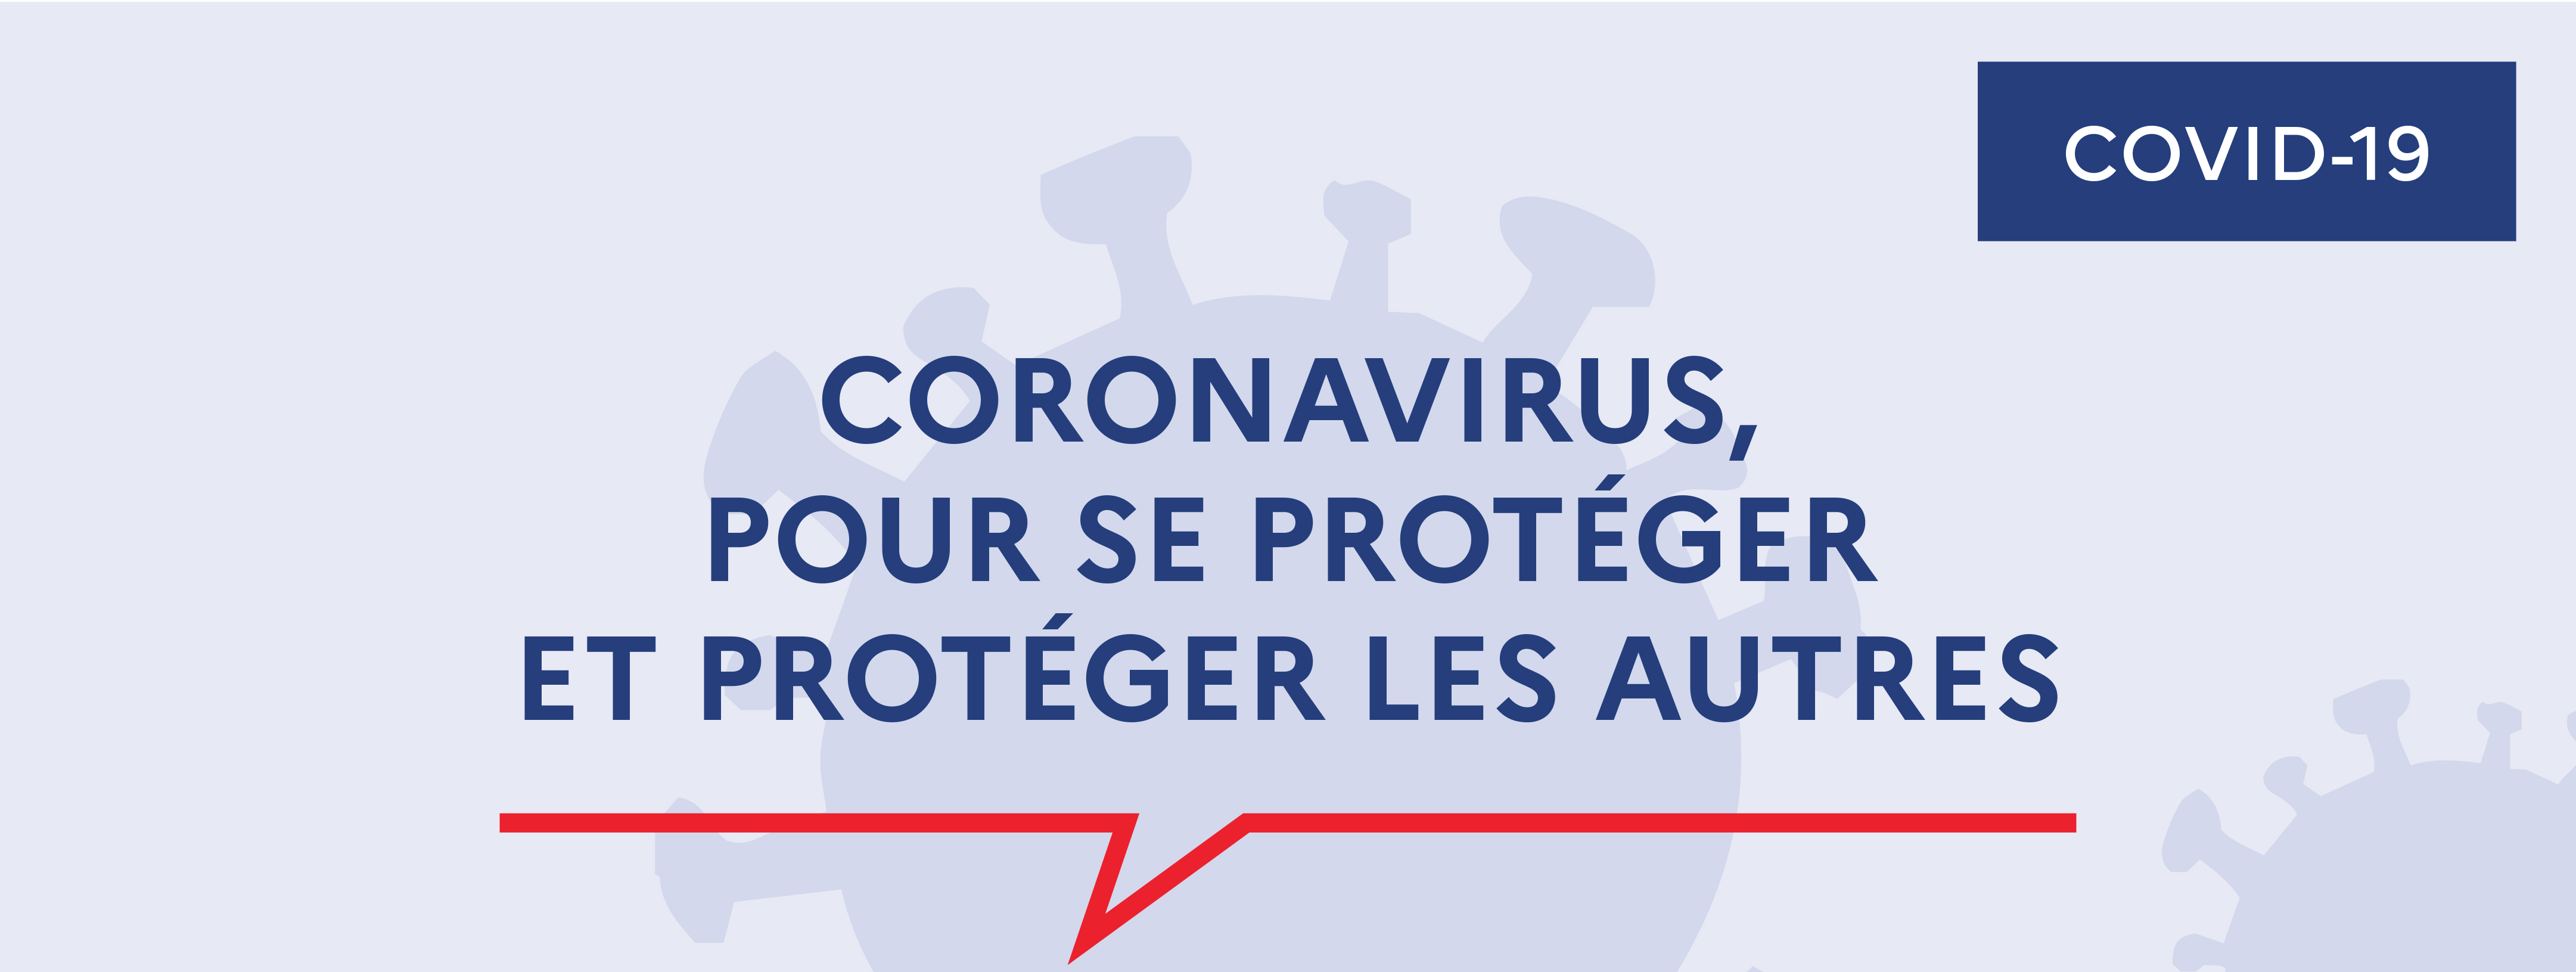 CORONAVIRUS COVID-19 : MESURES DE PRÉVENTION